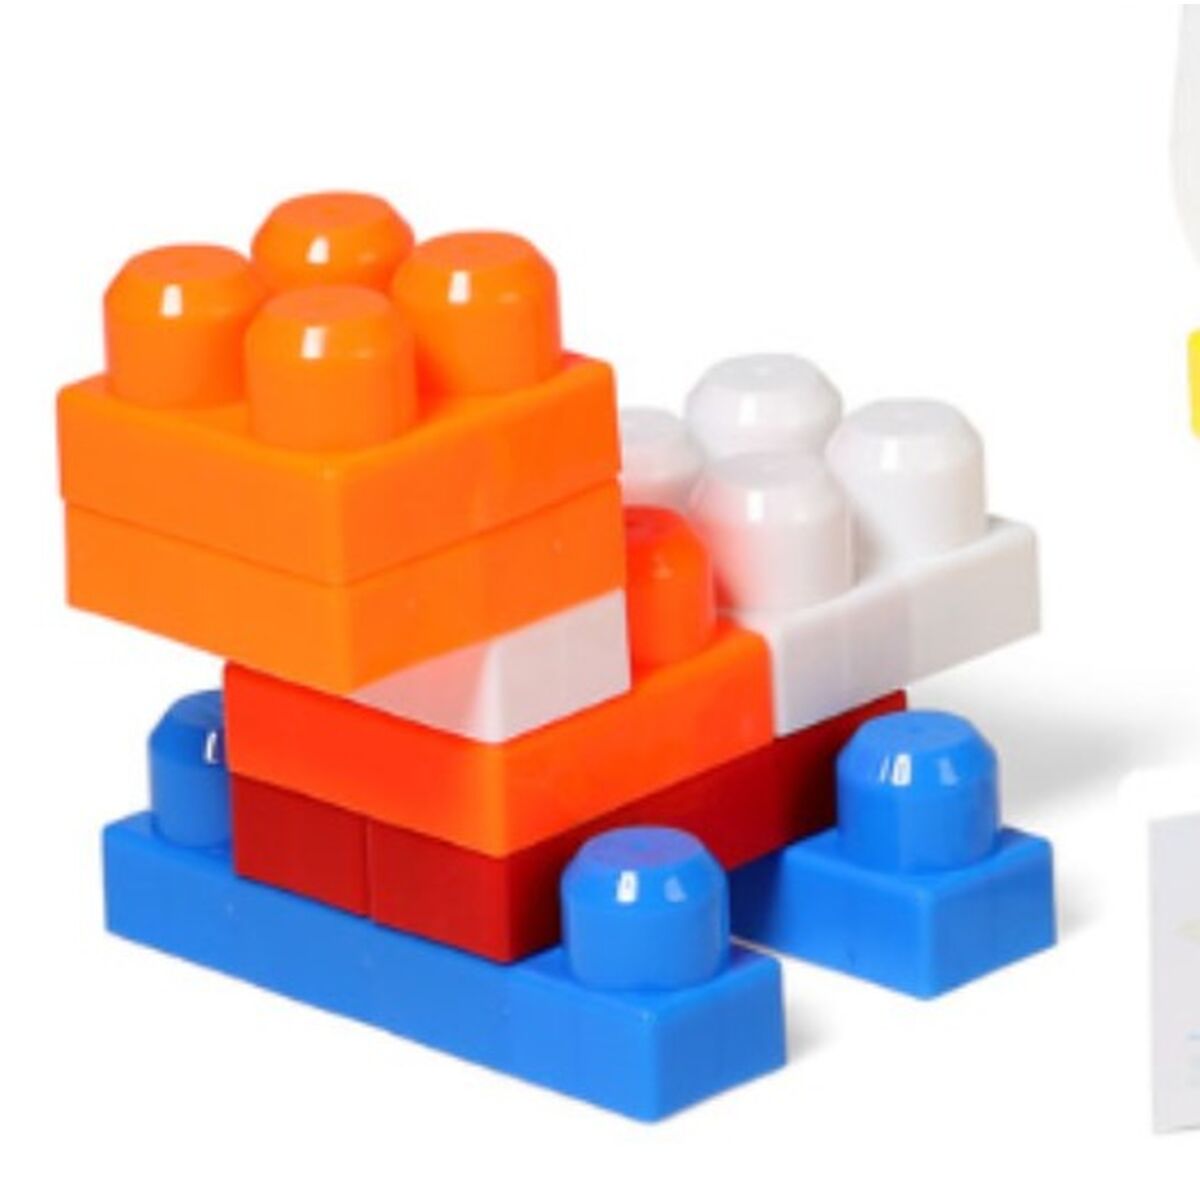 Building Blocks Play & Learn Multicolour 36 Pieces